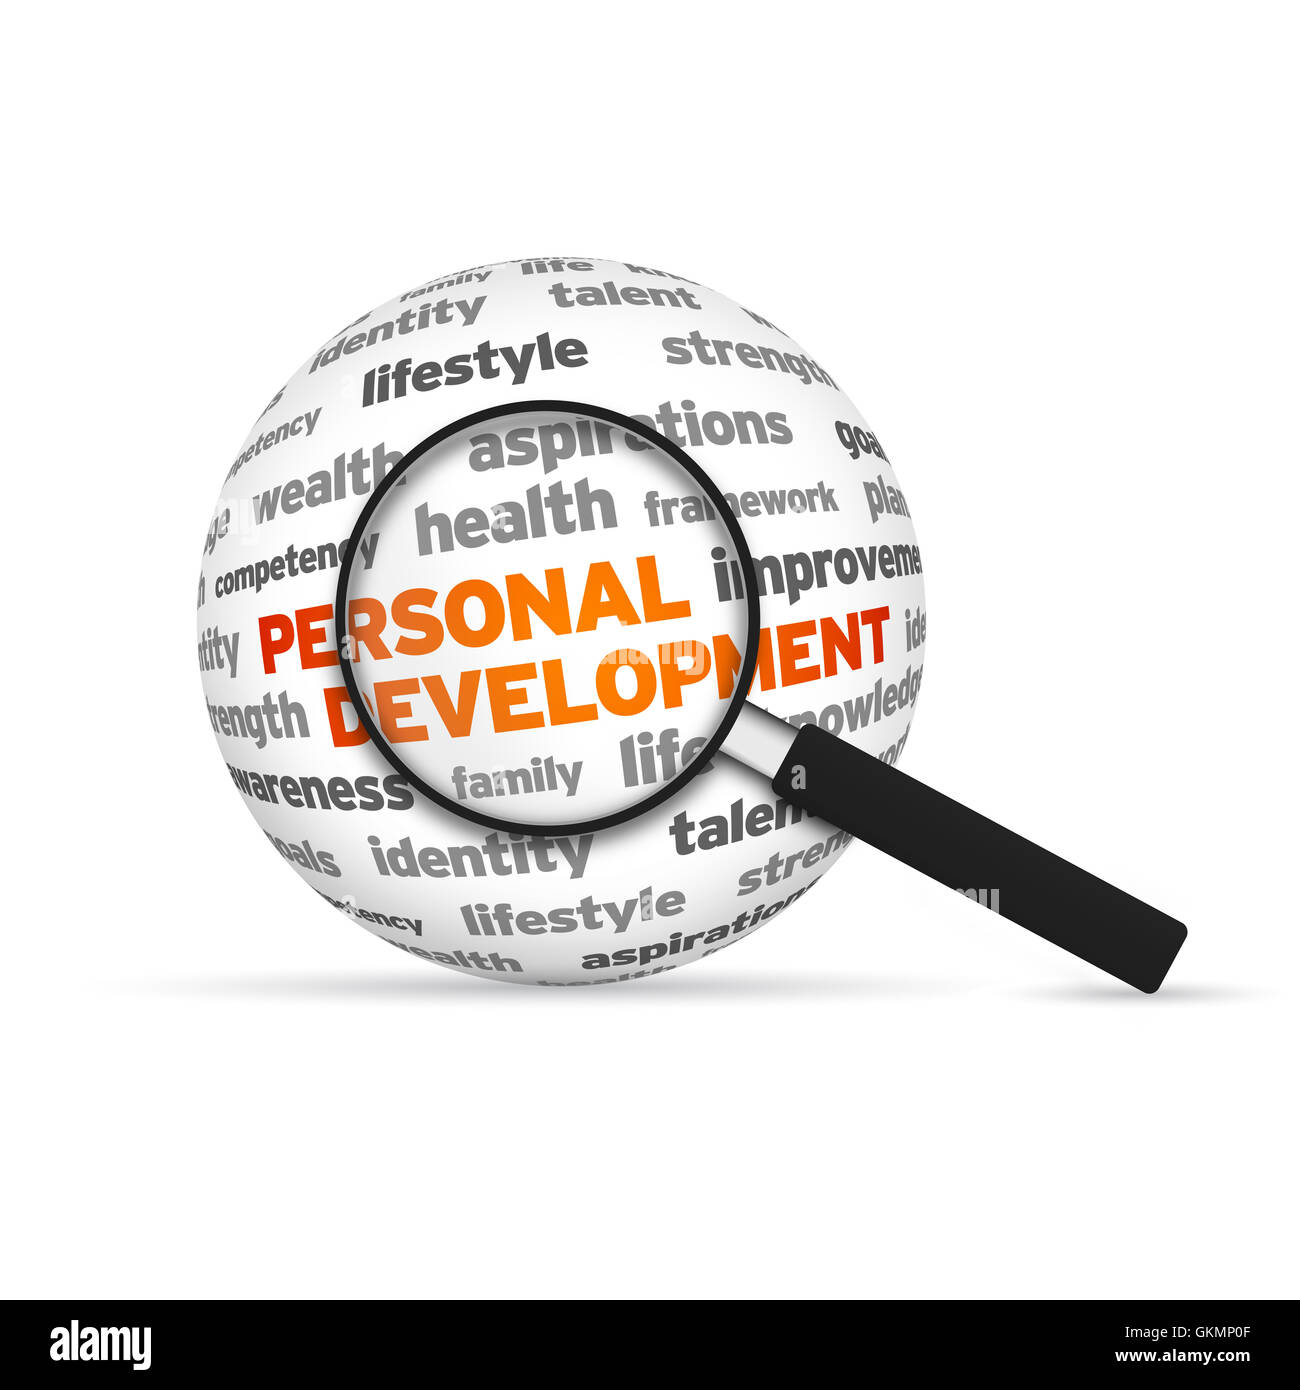 Personal Development Stock Photo